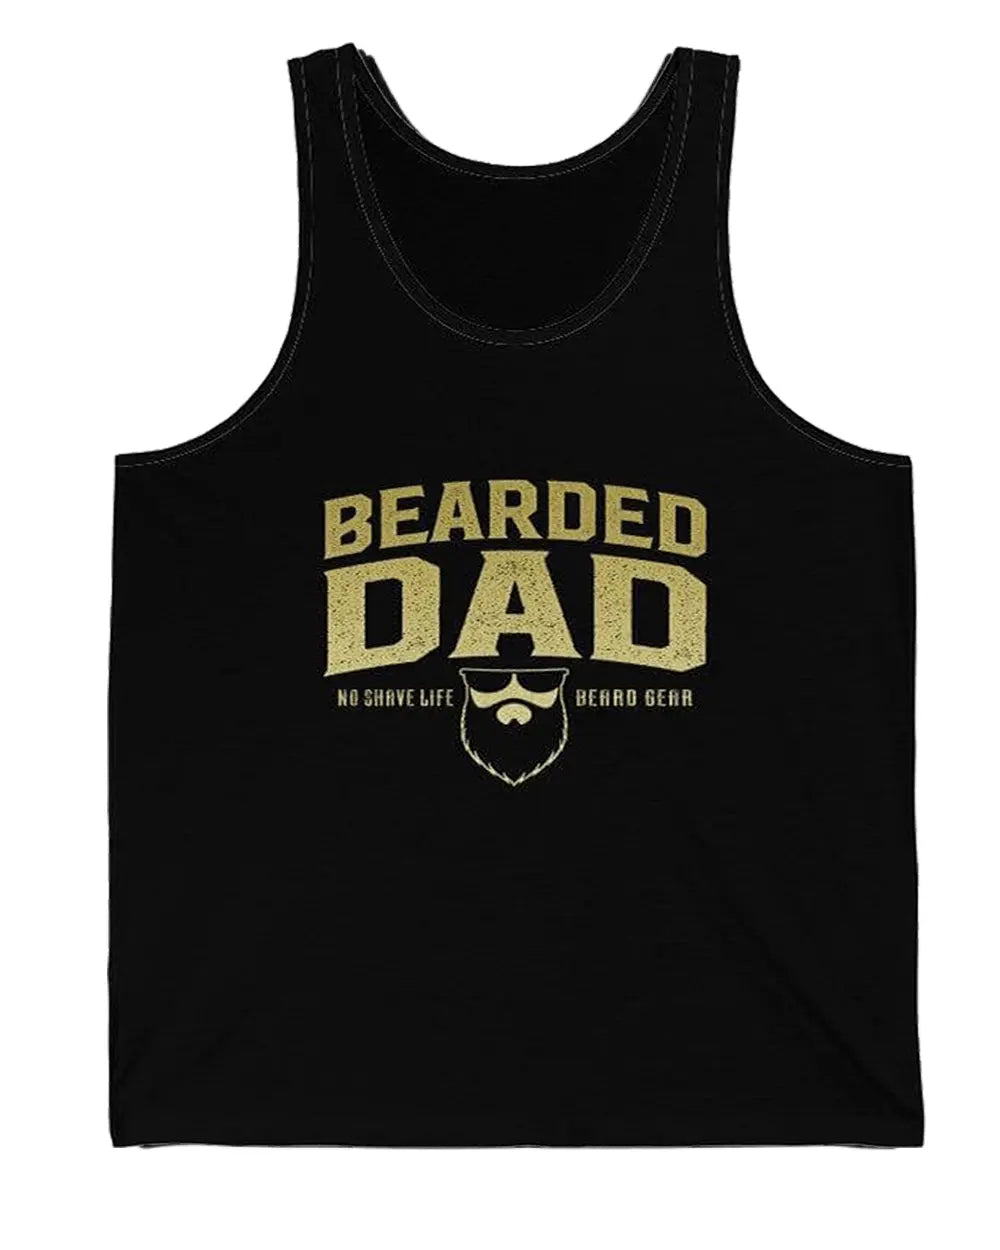 Bearded Dad Black Men's Tank Top